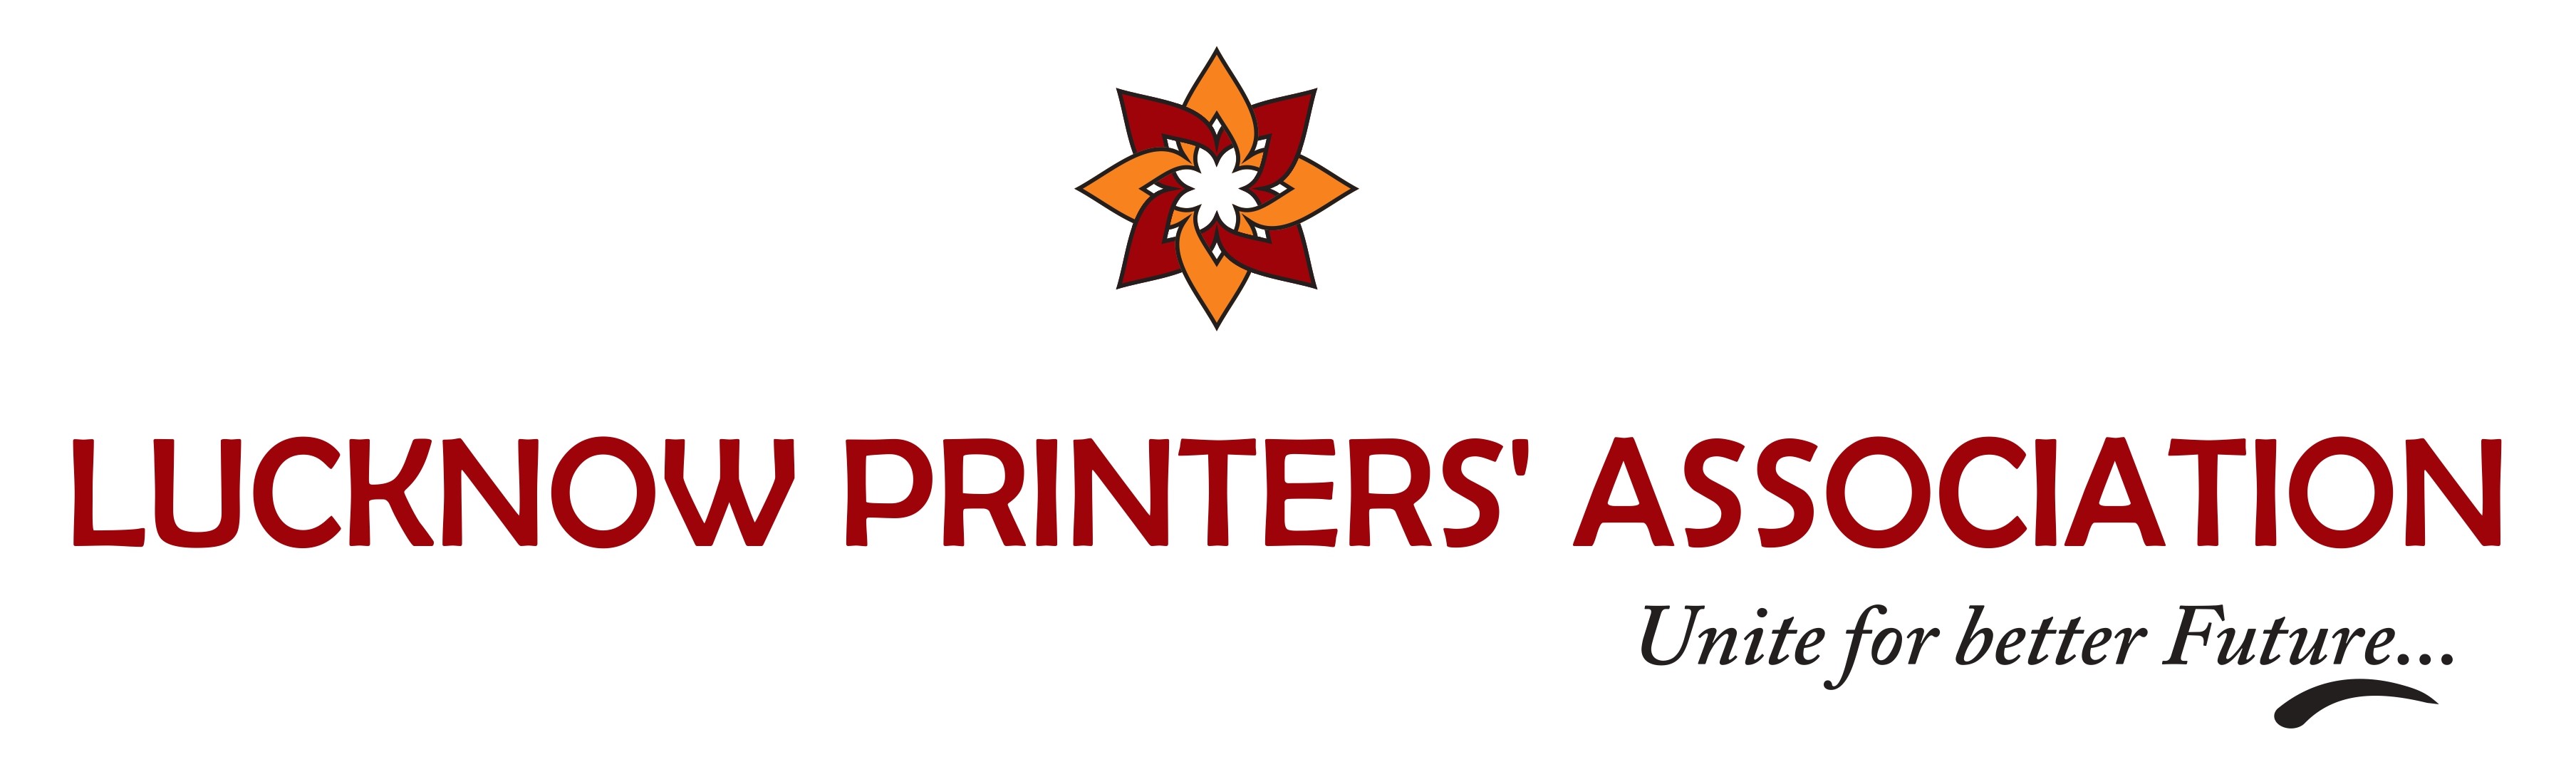 lucknow-printers-association